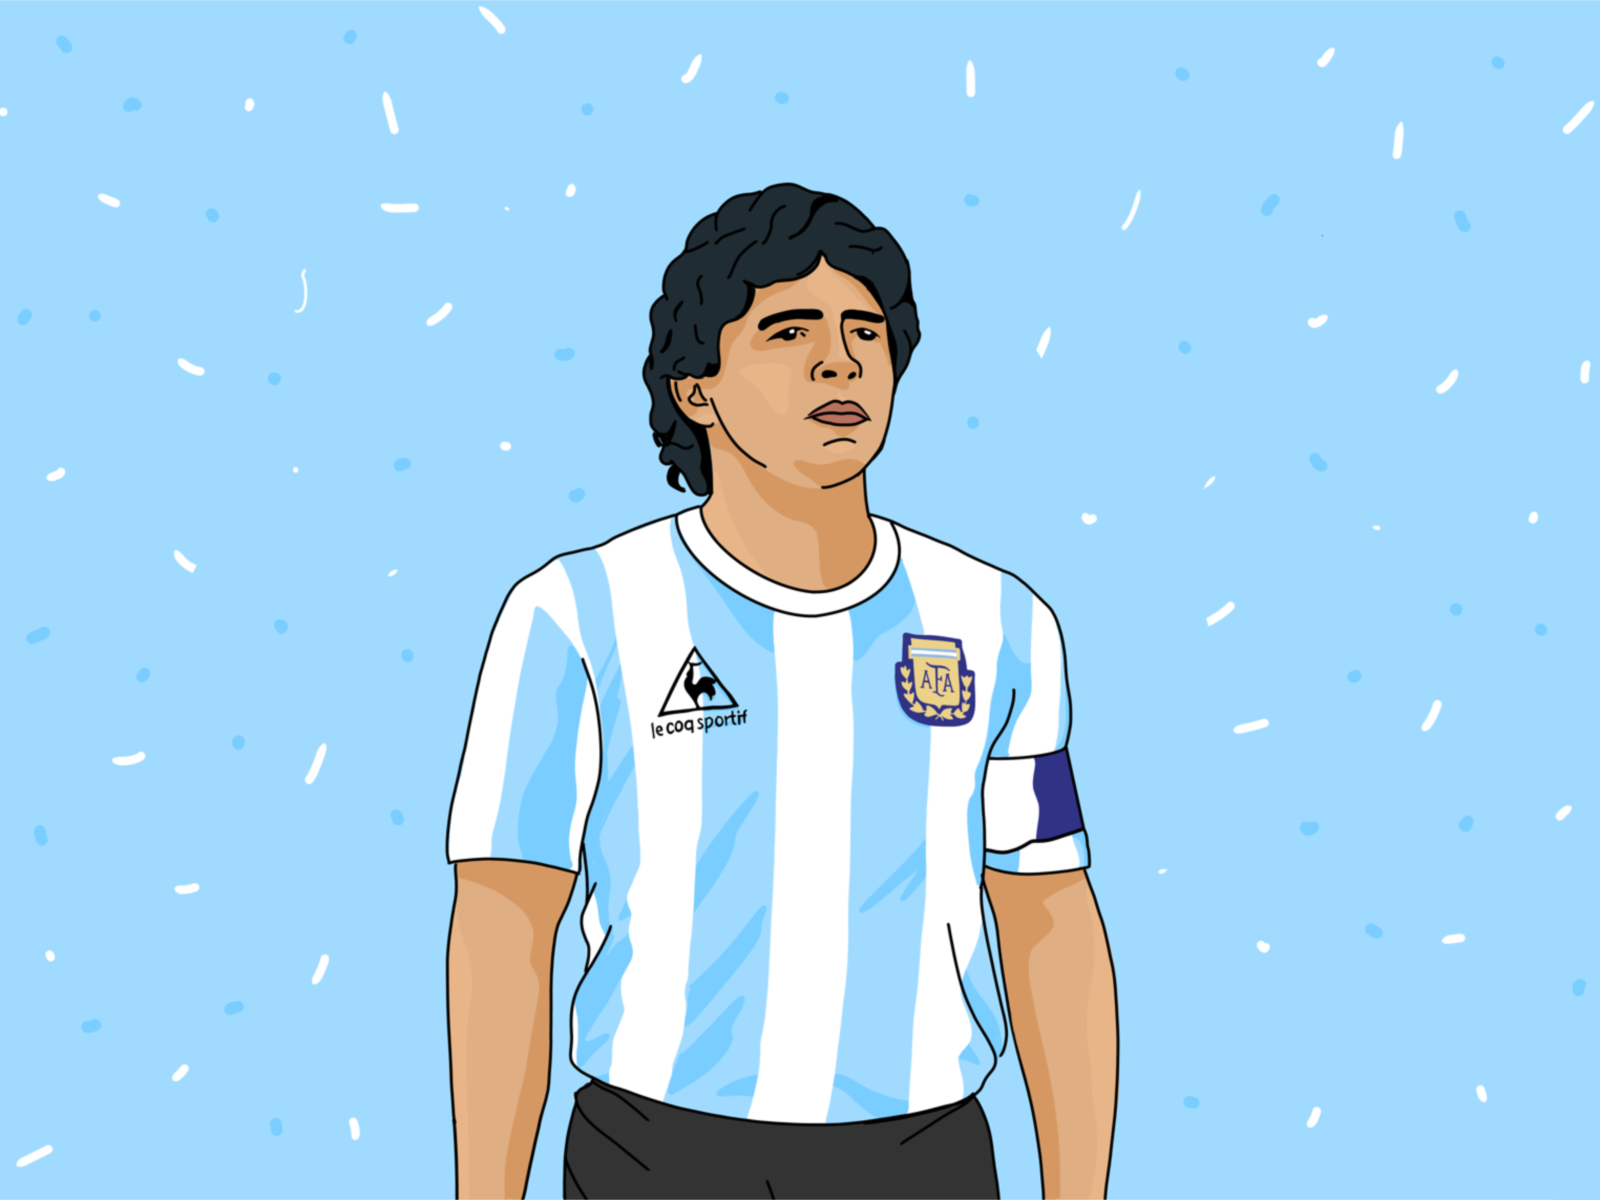 'Gracias a la pelota' - Diego Maradona, 1968-2020 maradona football procreate illustration miguelcm